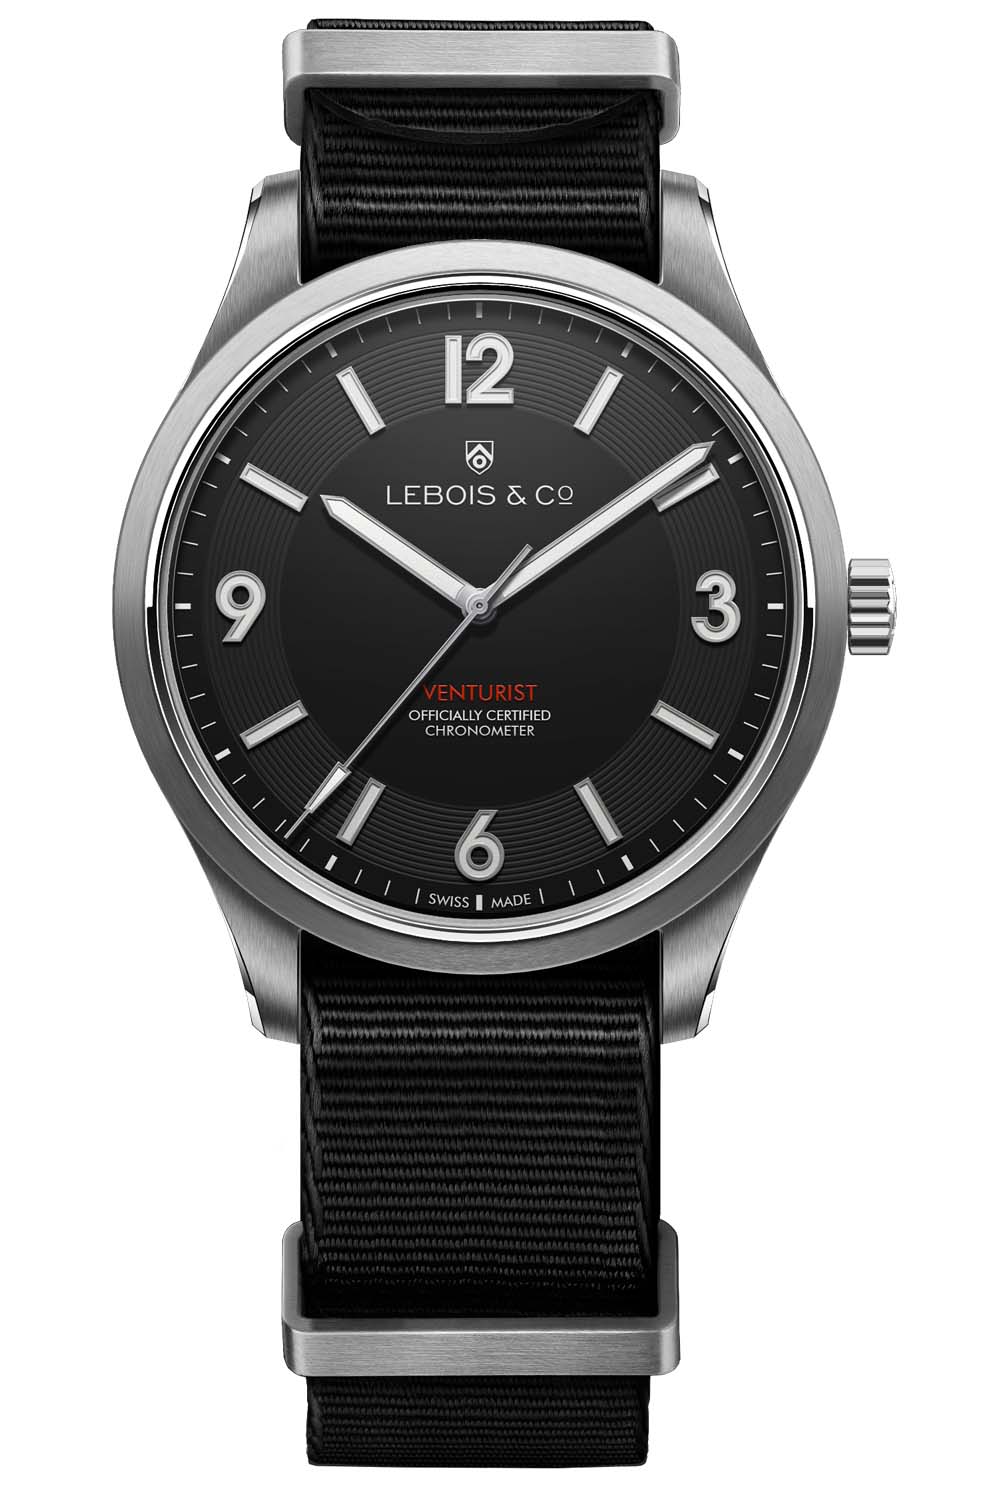 Lebois and Co Venturist Chronometer watch